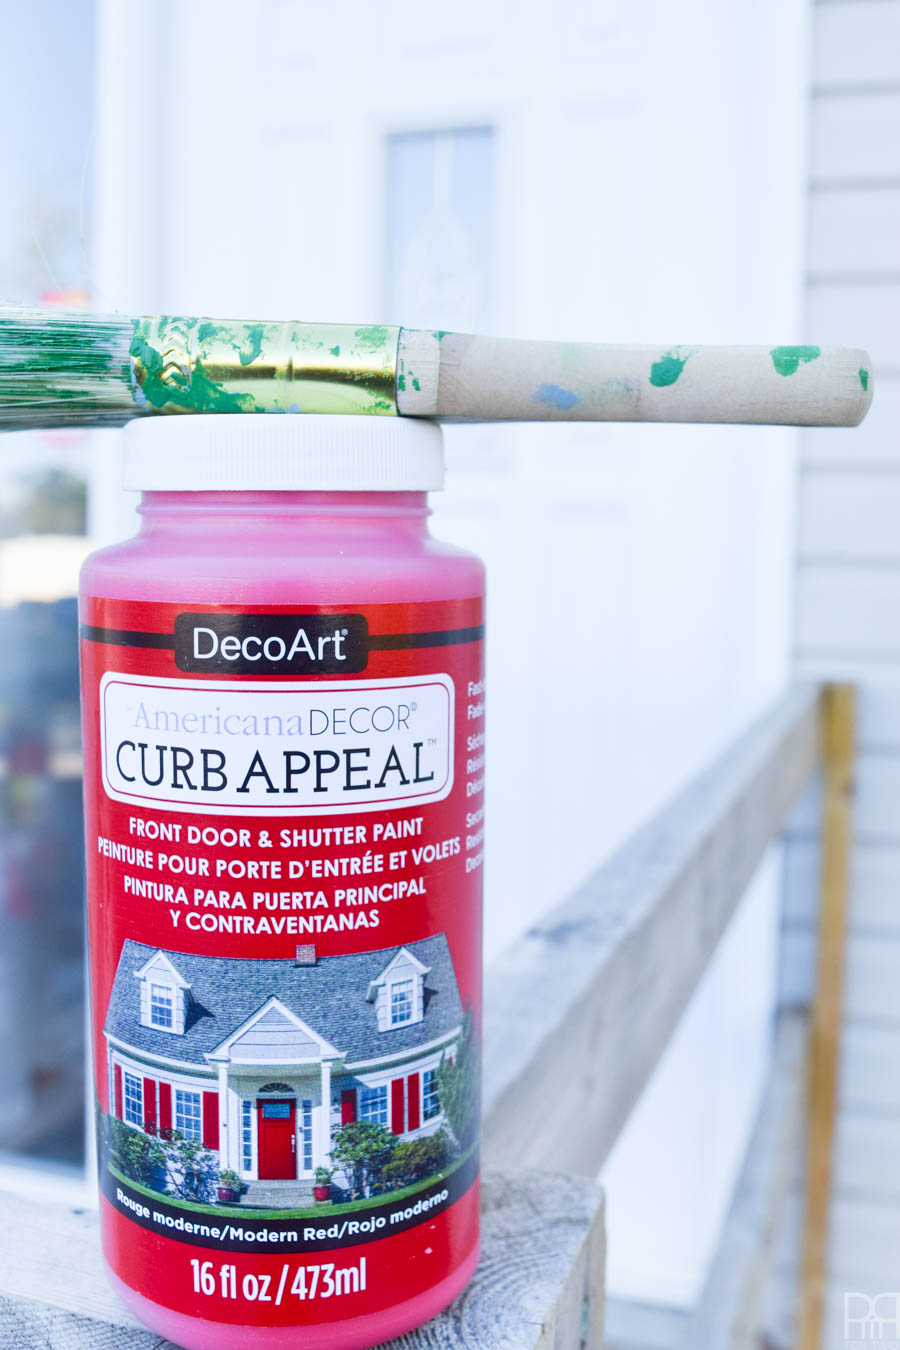 DecoArt Curb Appeal Paint